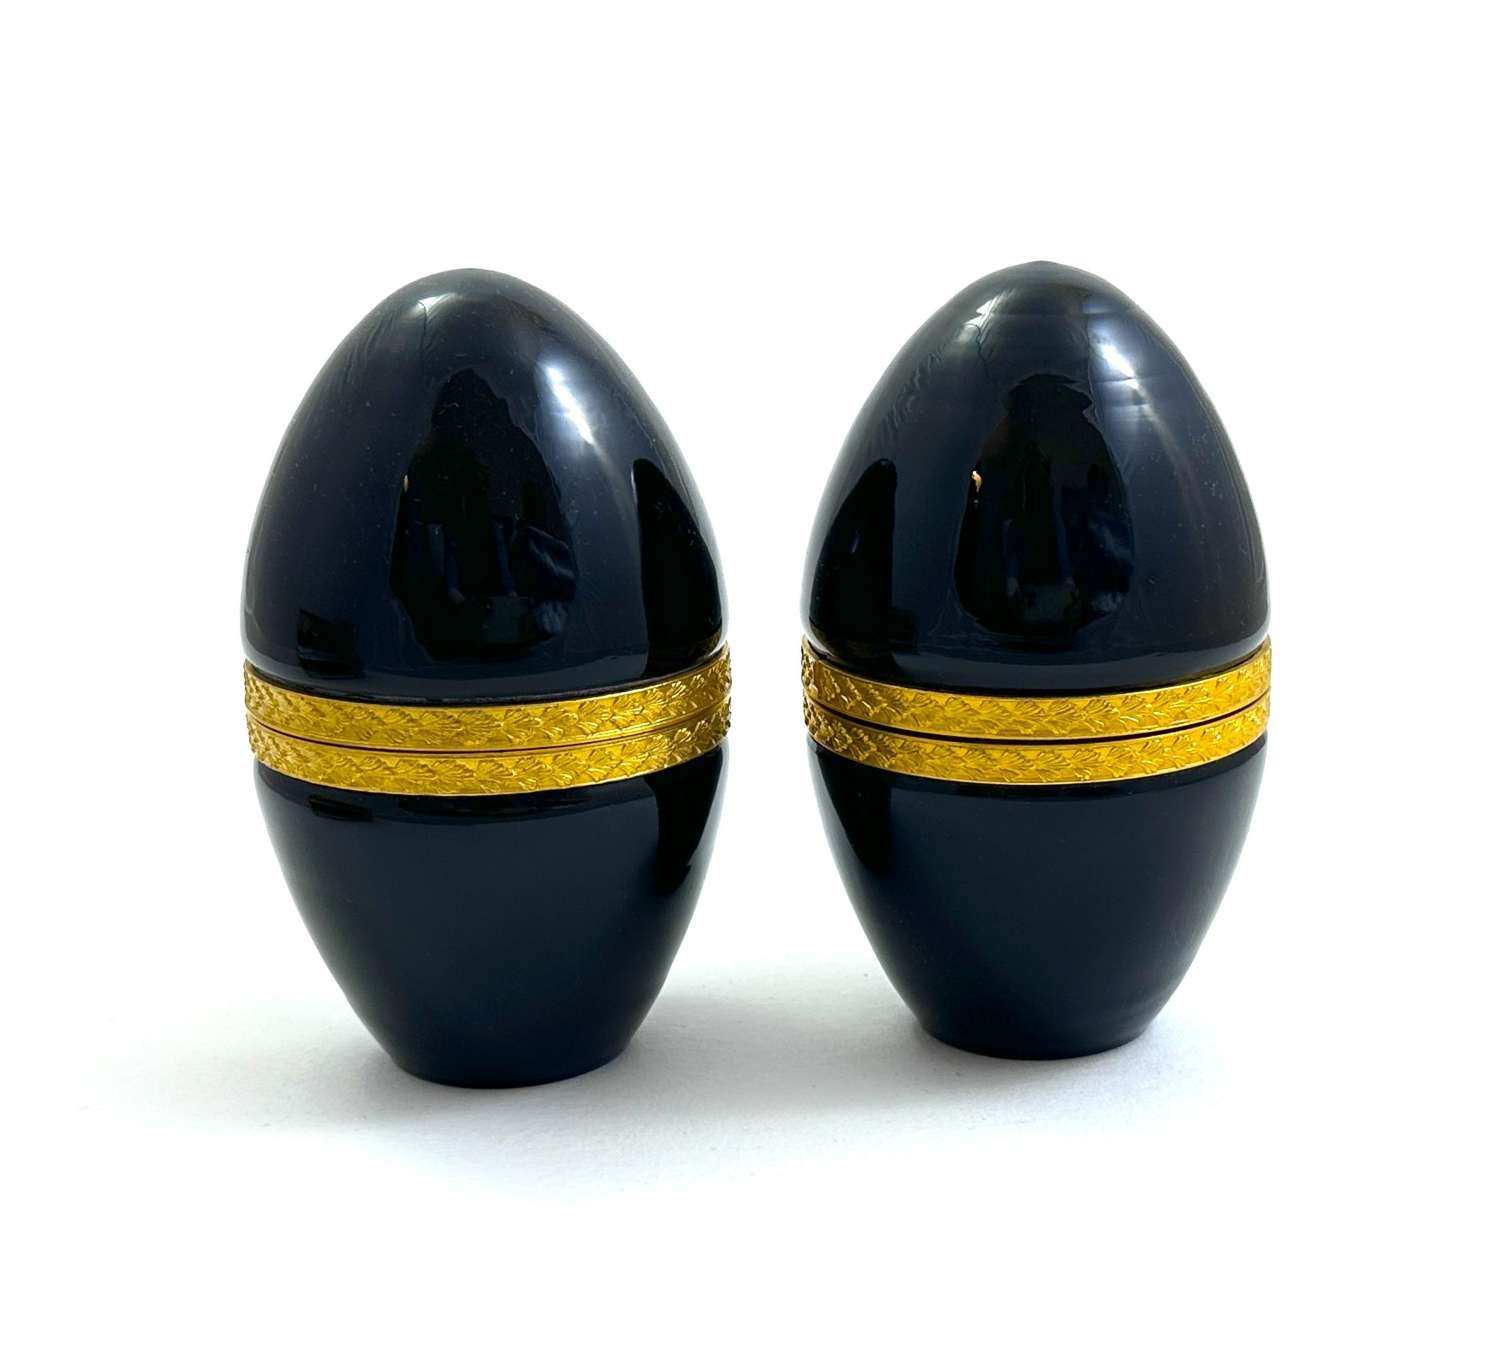 A Pair Antique Murano Black Opaline Glass Egg Shaped Casket Boxes